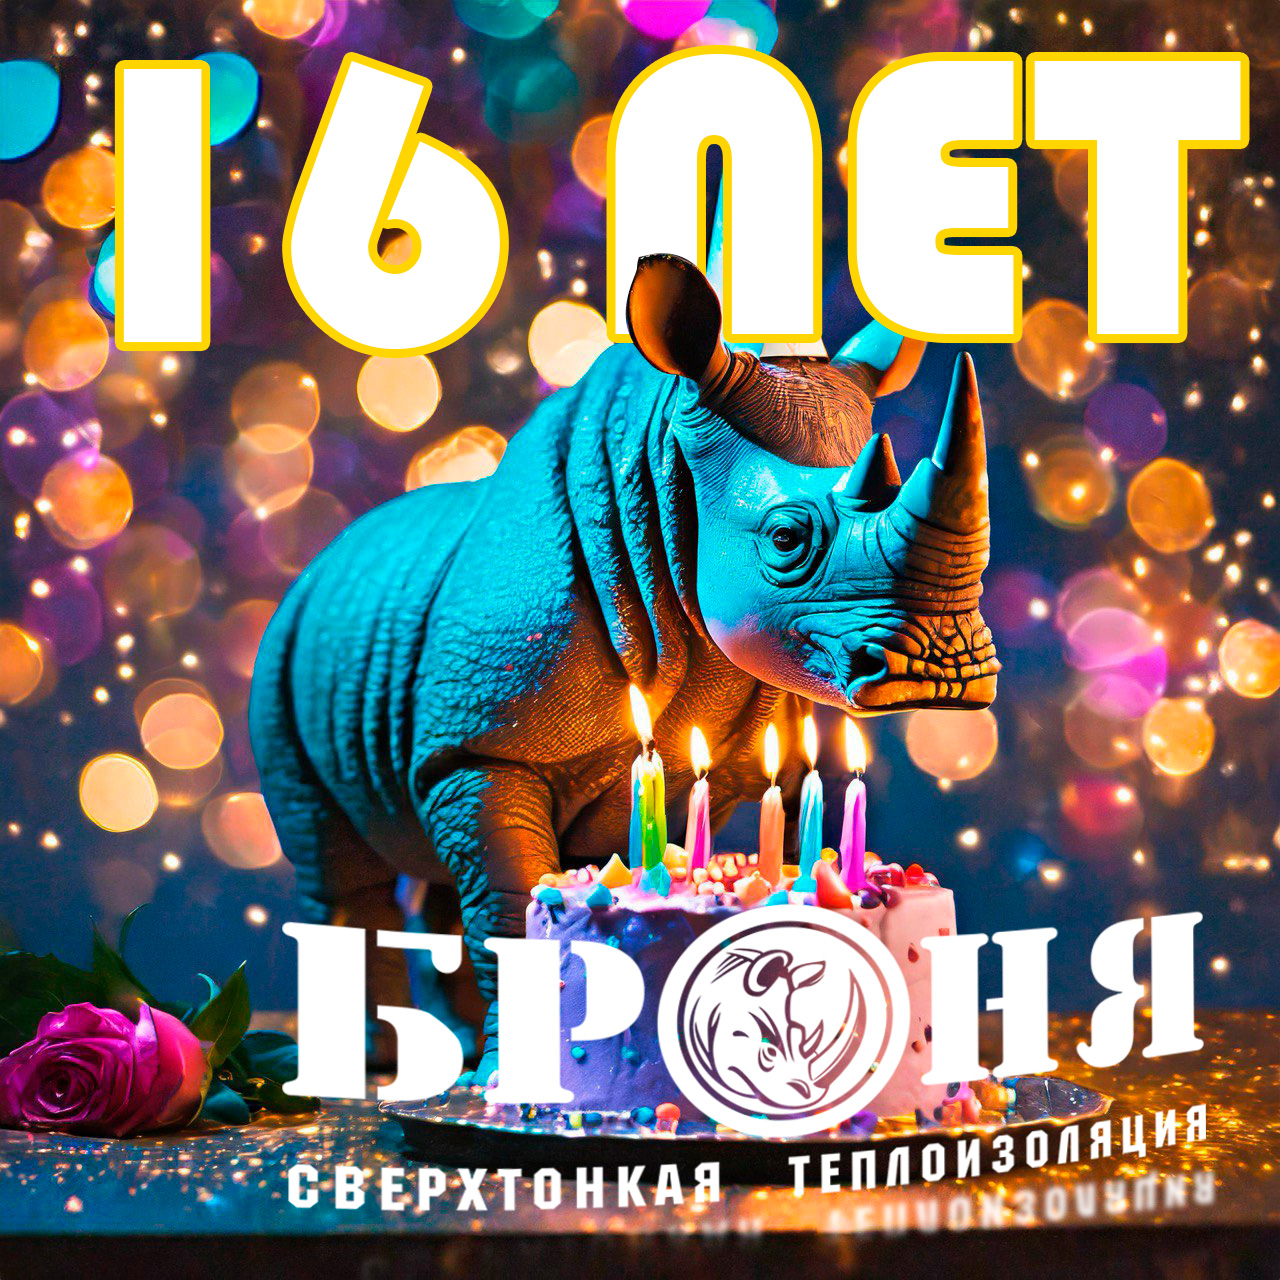 Happy holiday-Happy Birthday Bronya! We are 16 years old